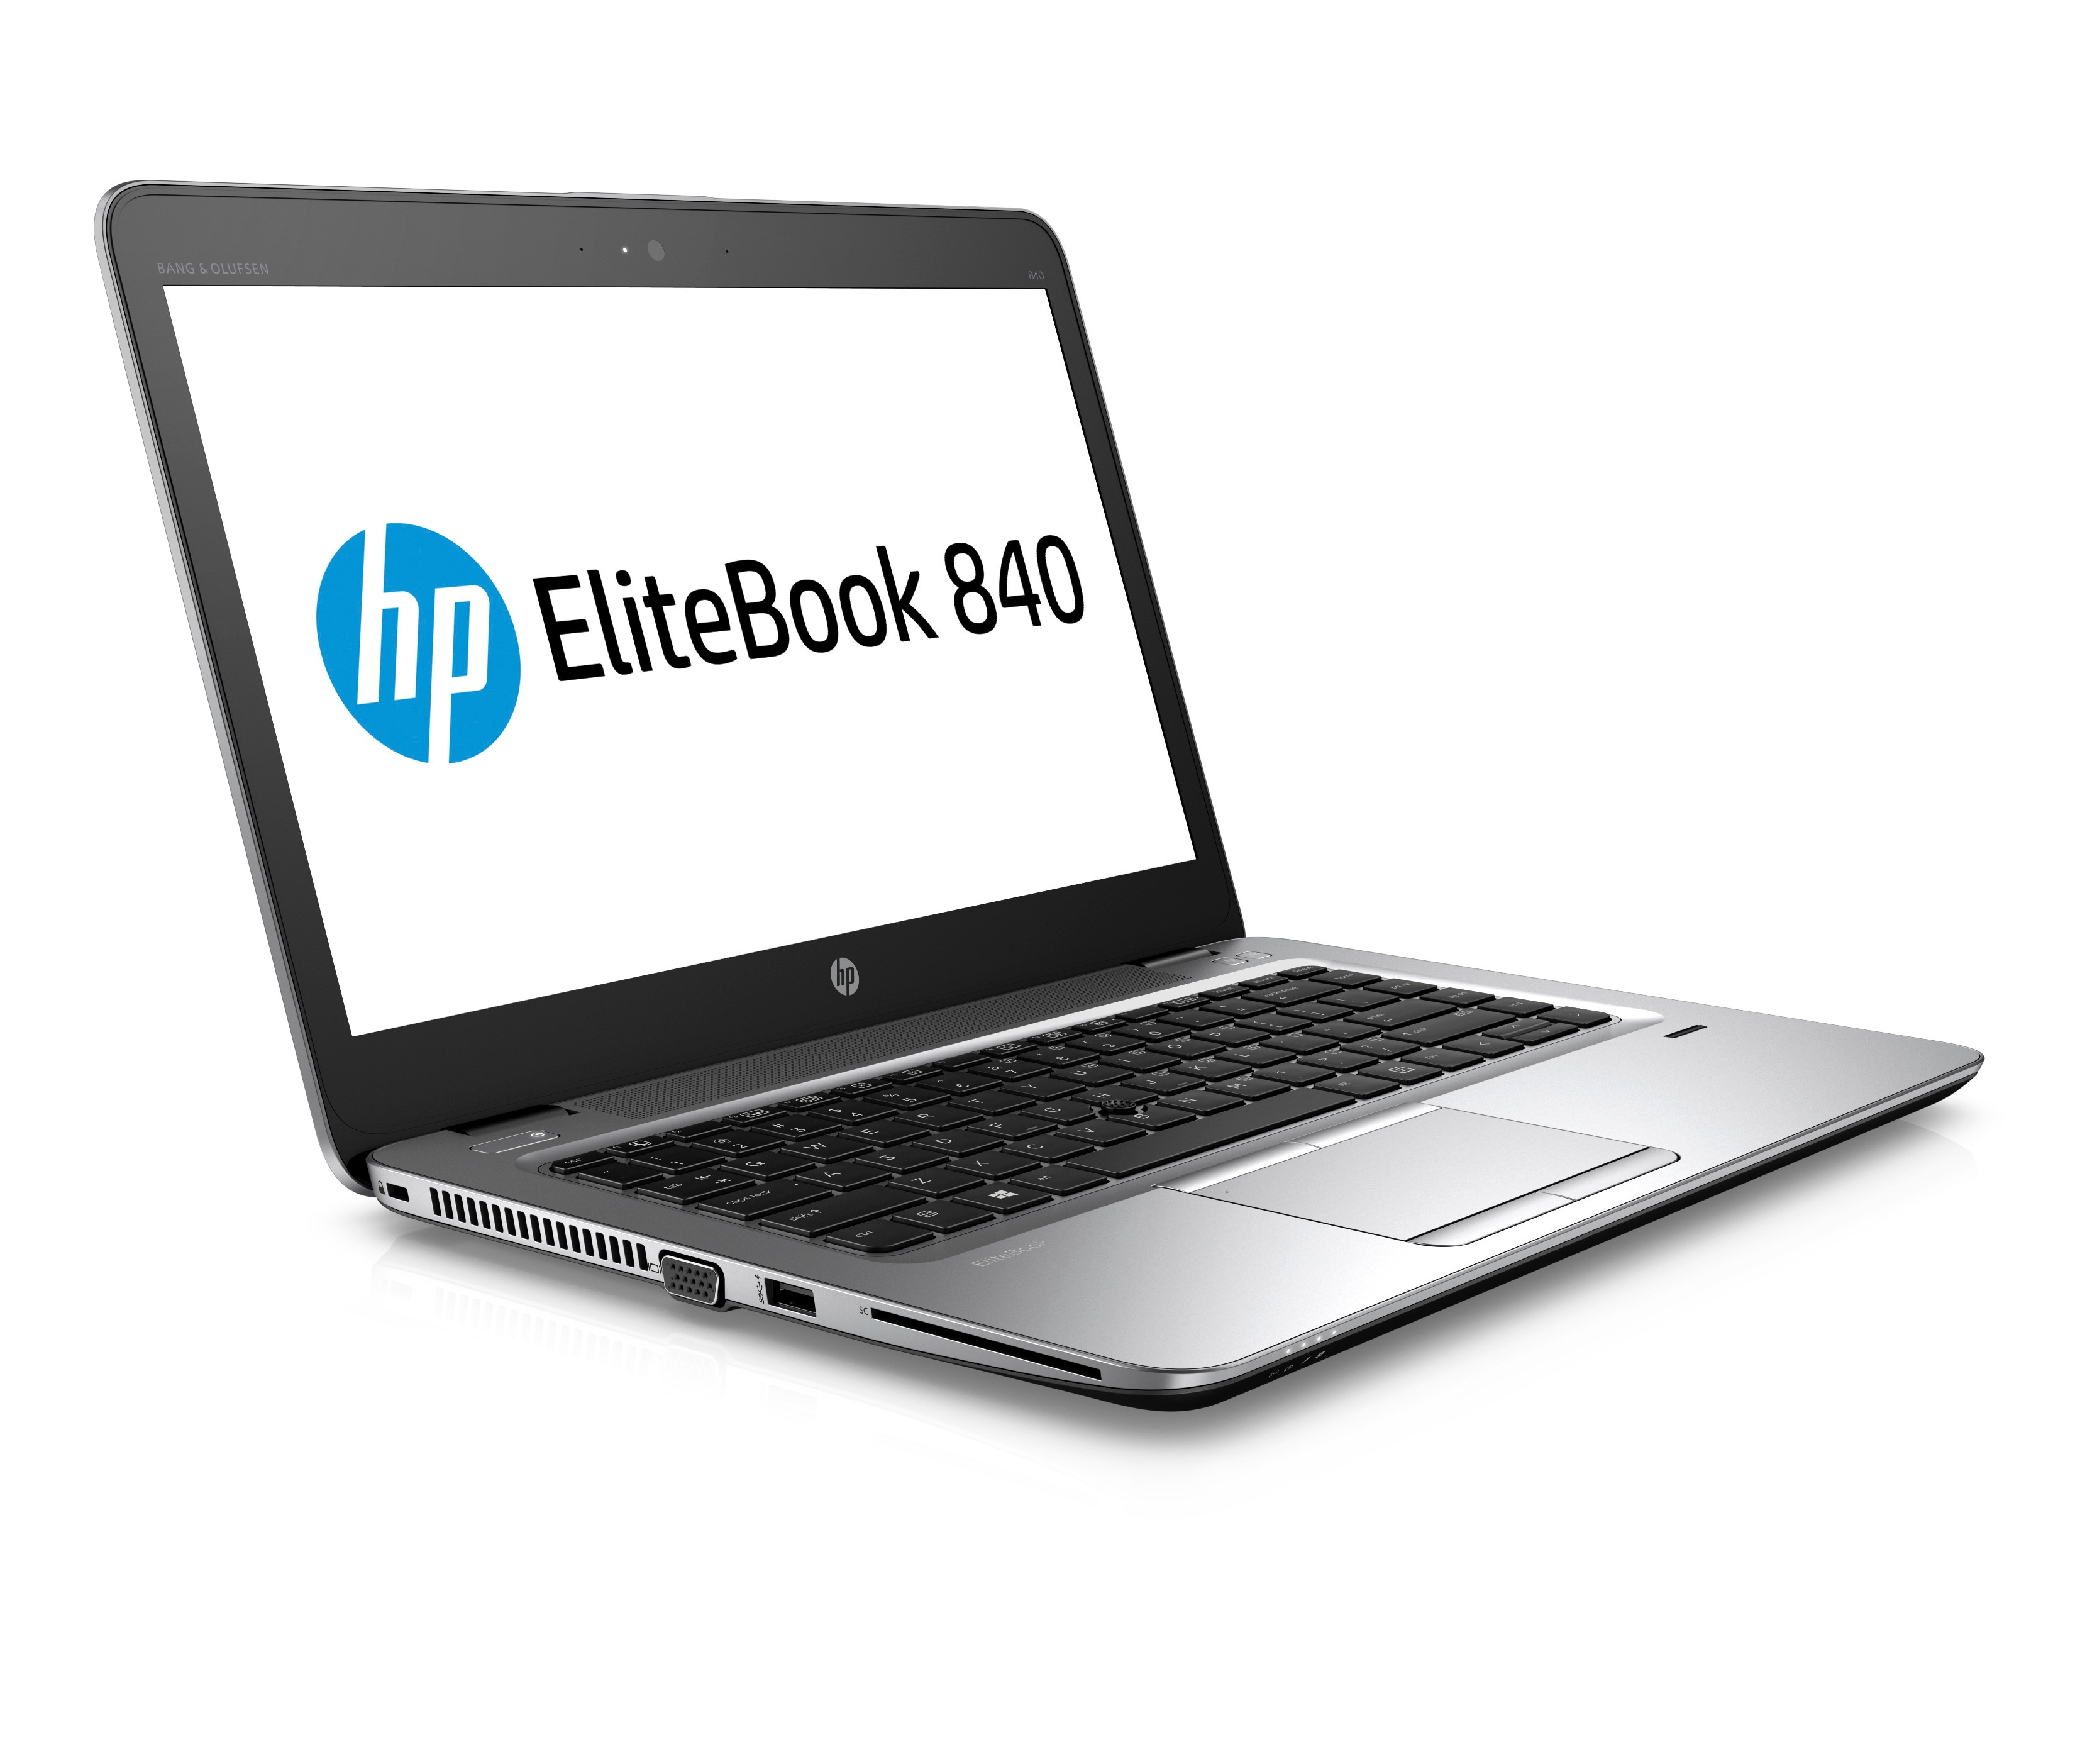 HP Elitebook 840 G4  Intel i5-7300U Processor , 16GB RAM, 256GB SSD, 14-in LED, Webcam, Win10 Pro2